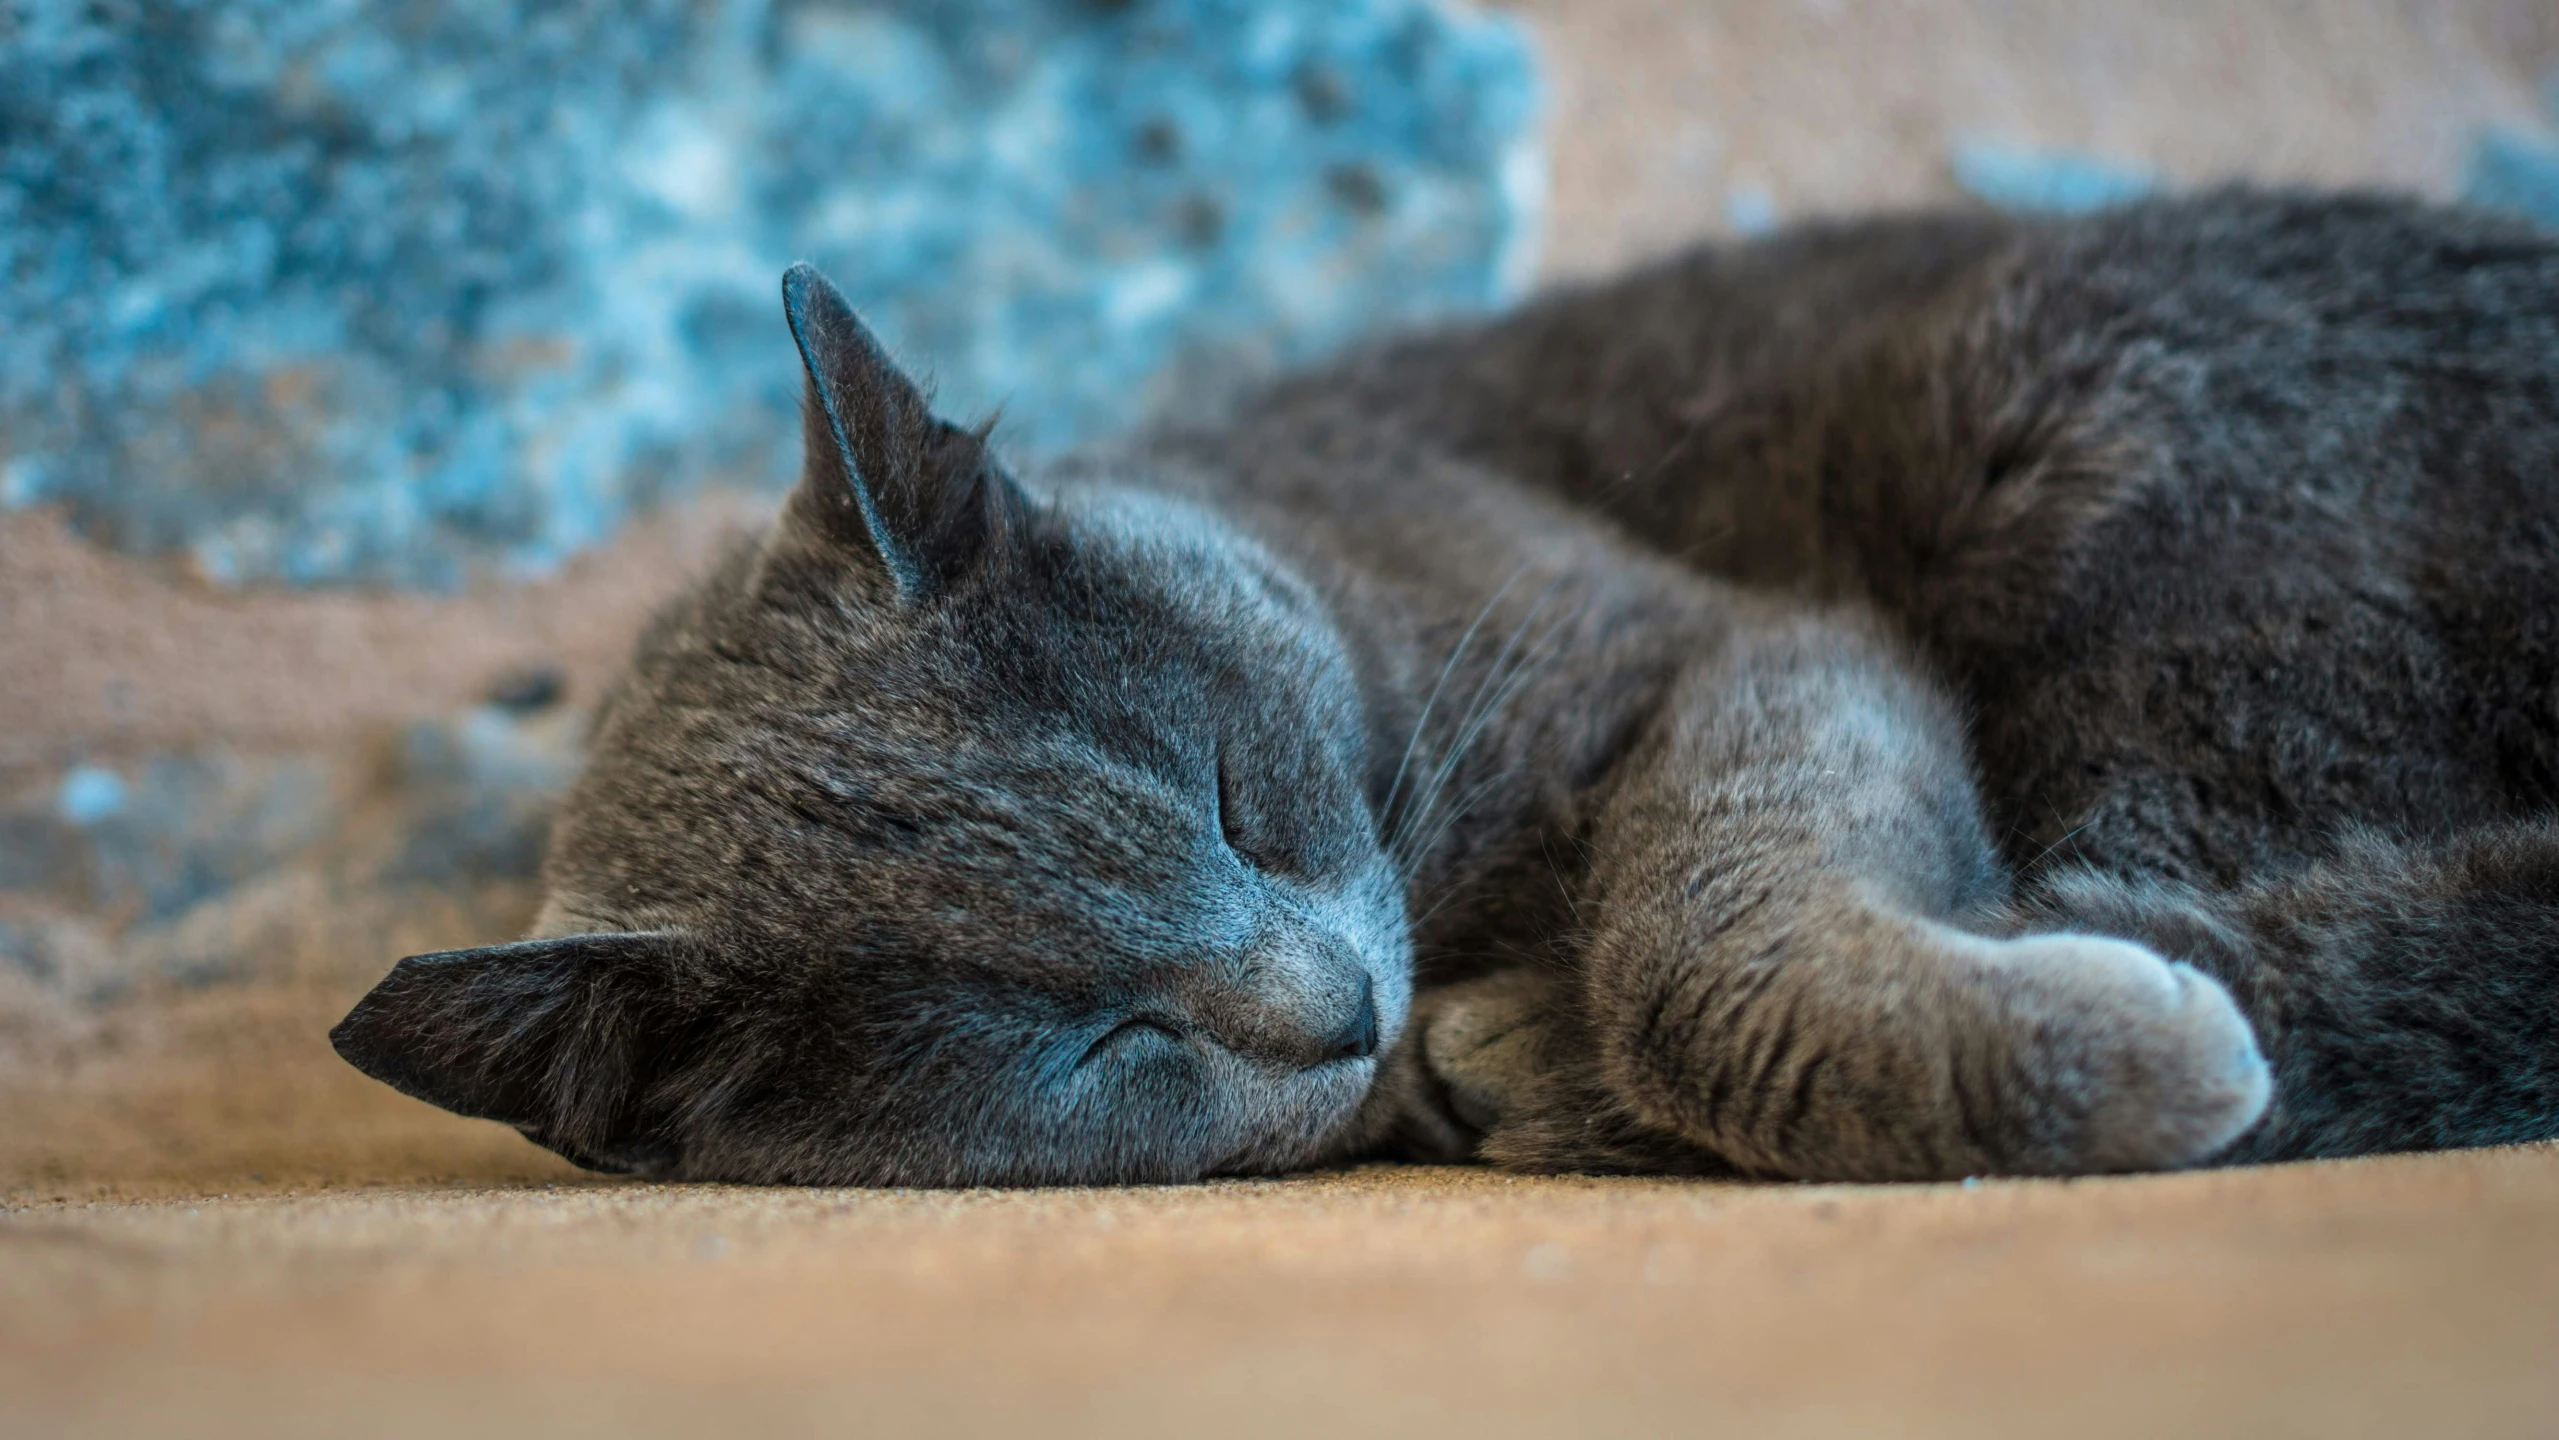 the blue cat sleeps peacefully on the carpet